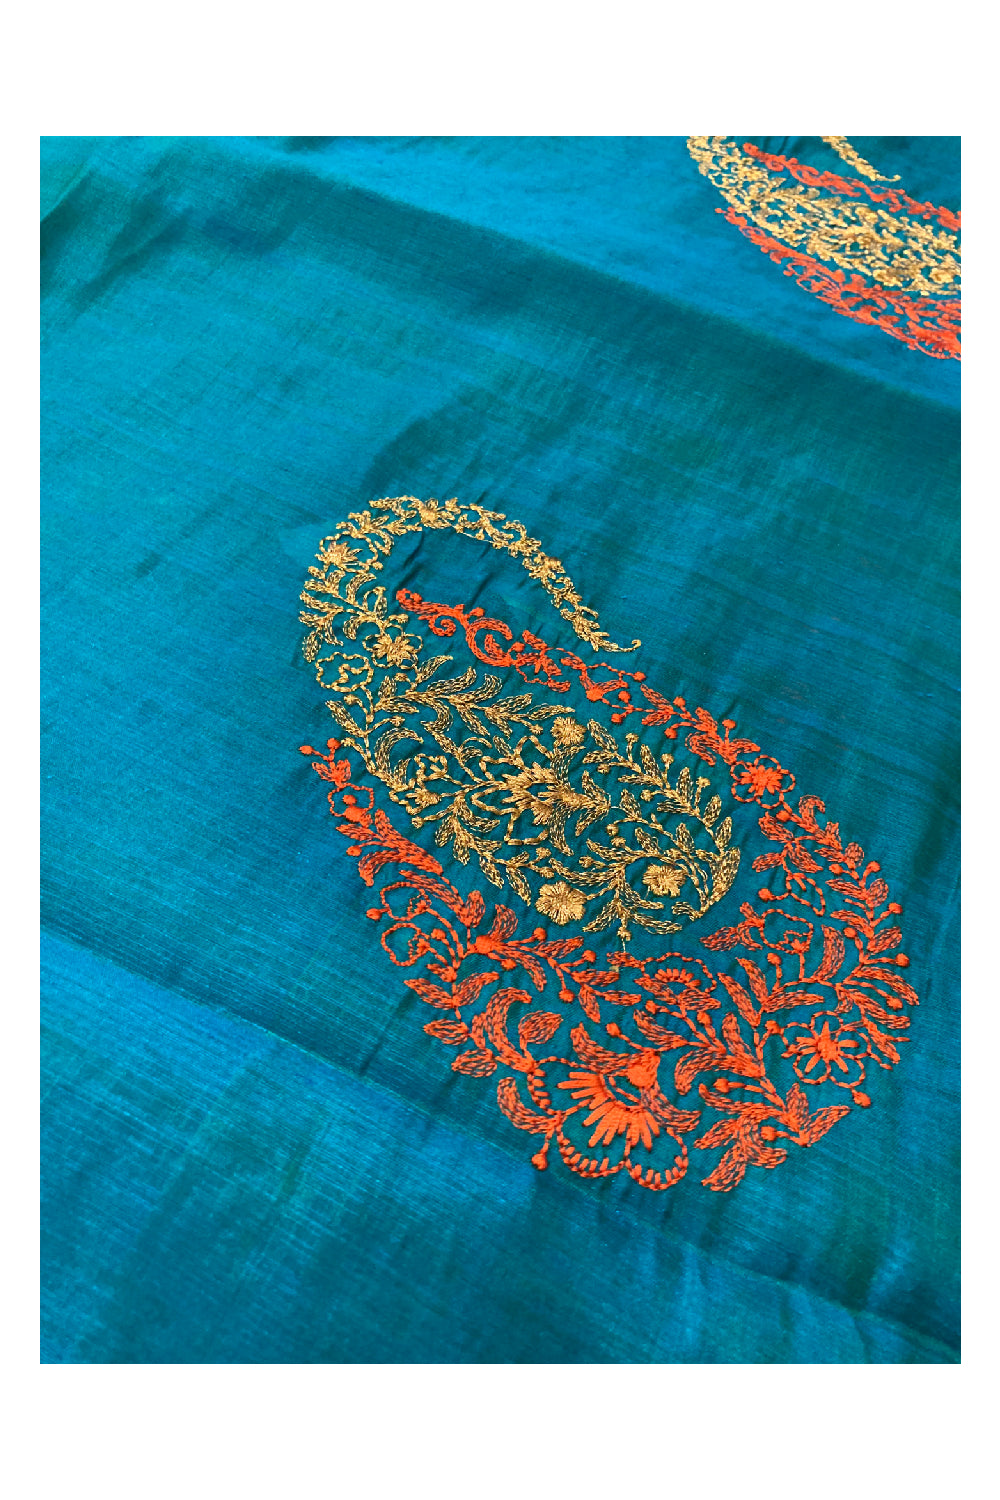 Southloom Manipuri Silk Blue Designer Saree with Embroidery work